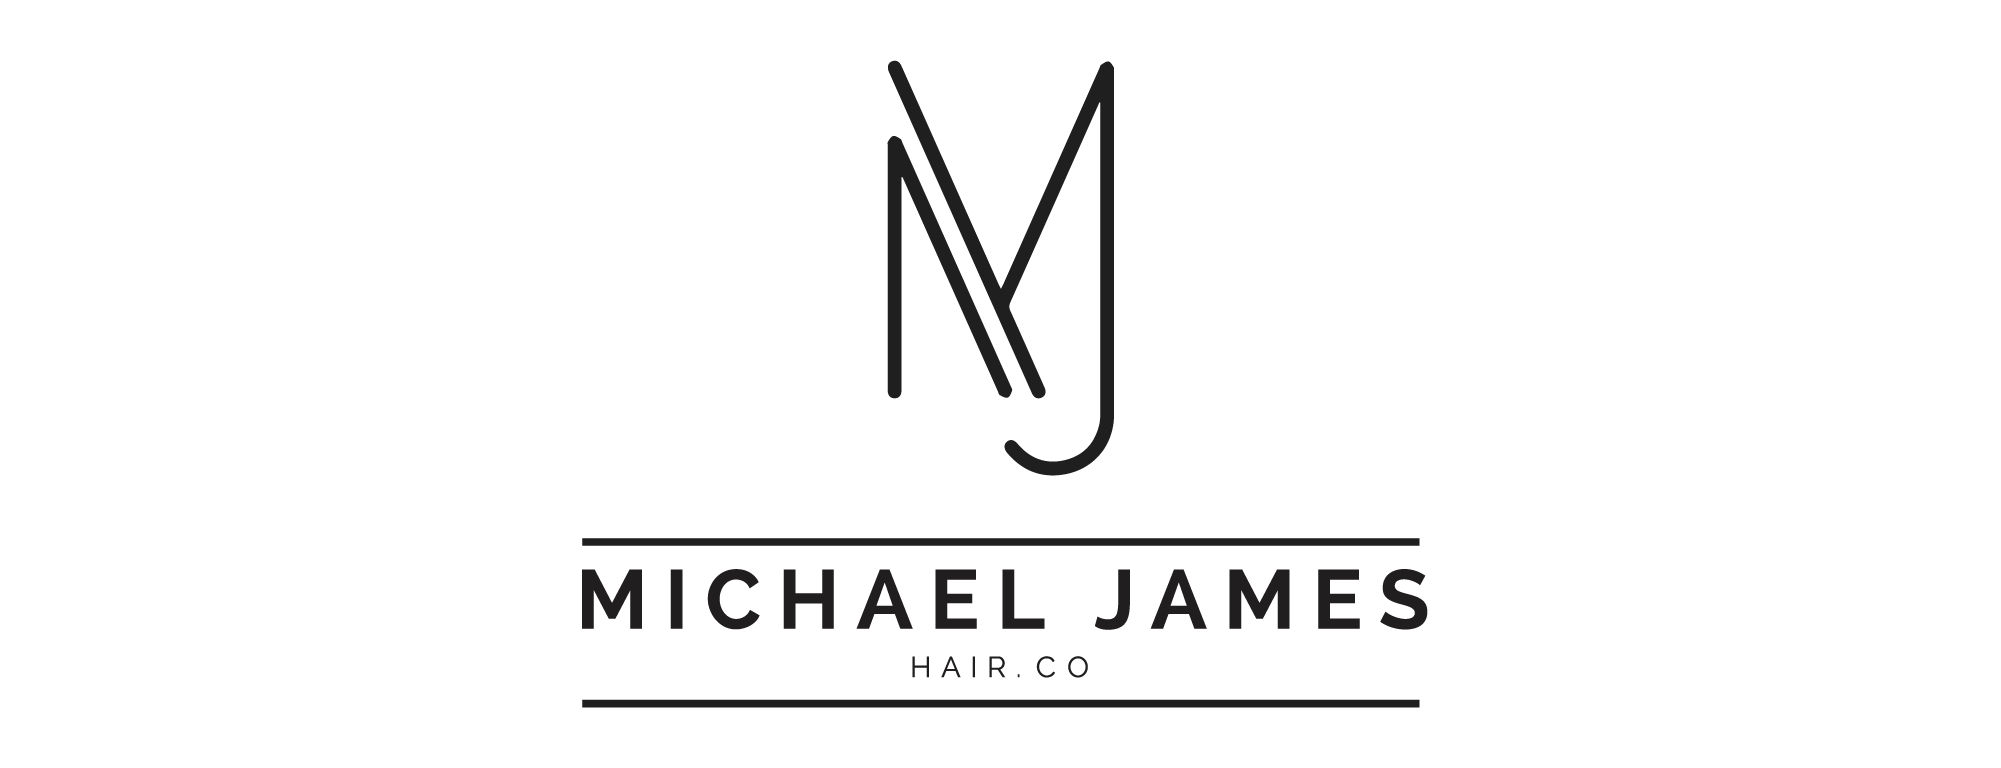 michae james hair logo , header of home page. logo 